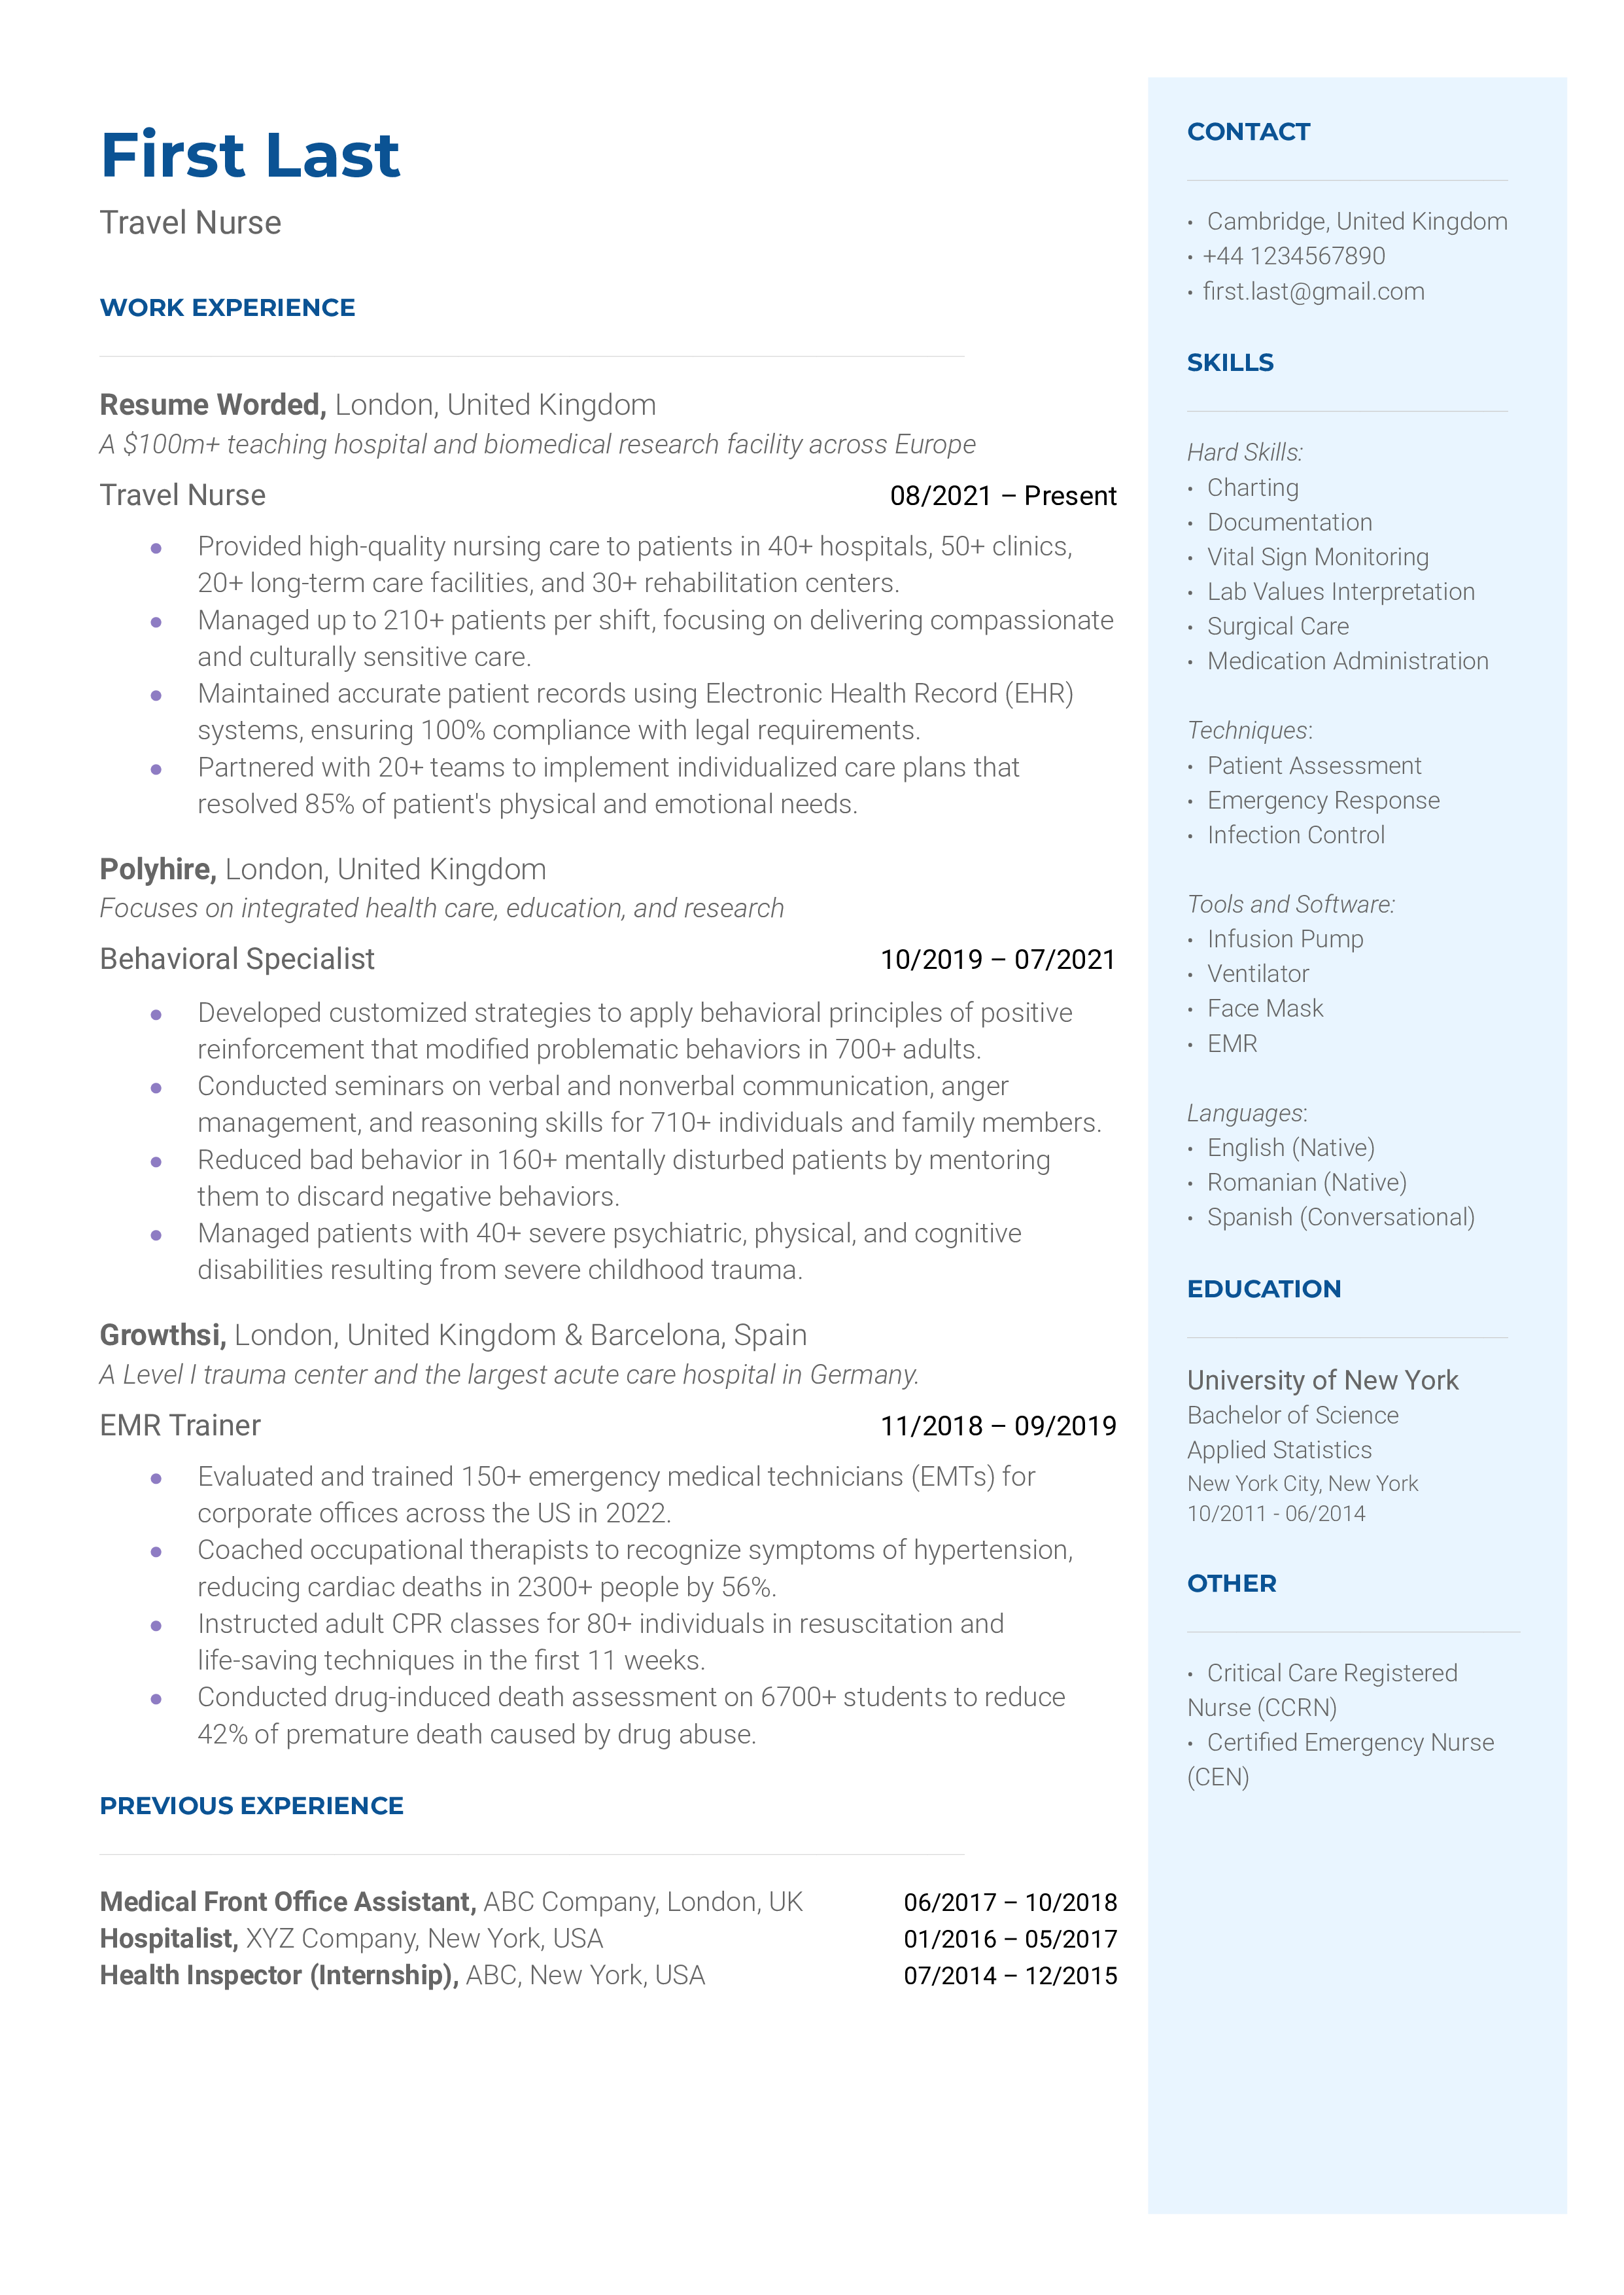 Travel Nurse Resume Example For 2023 | Resume Worded